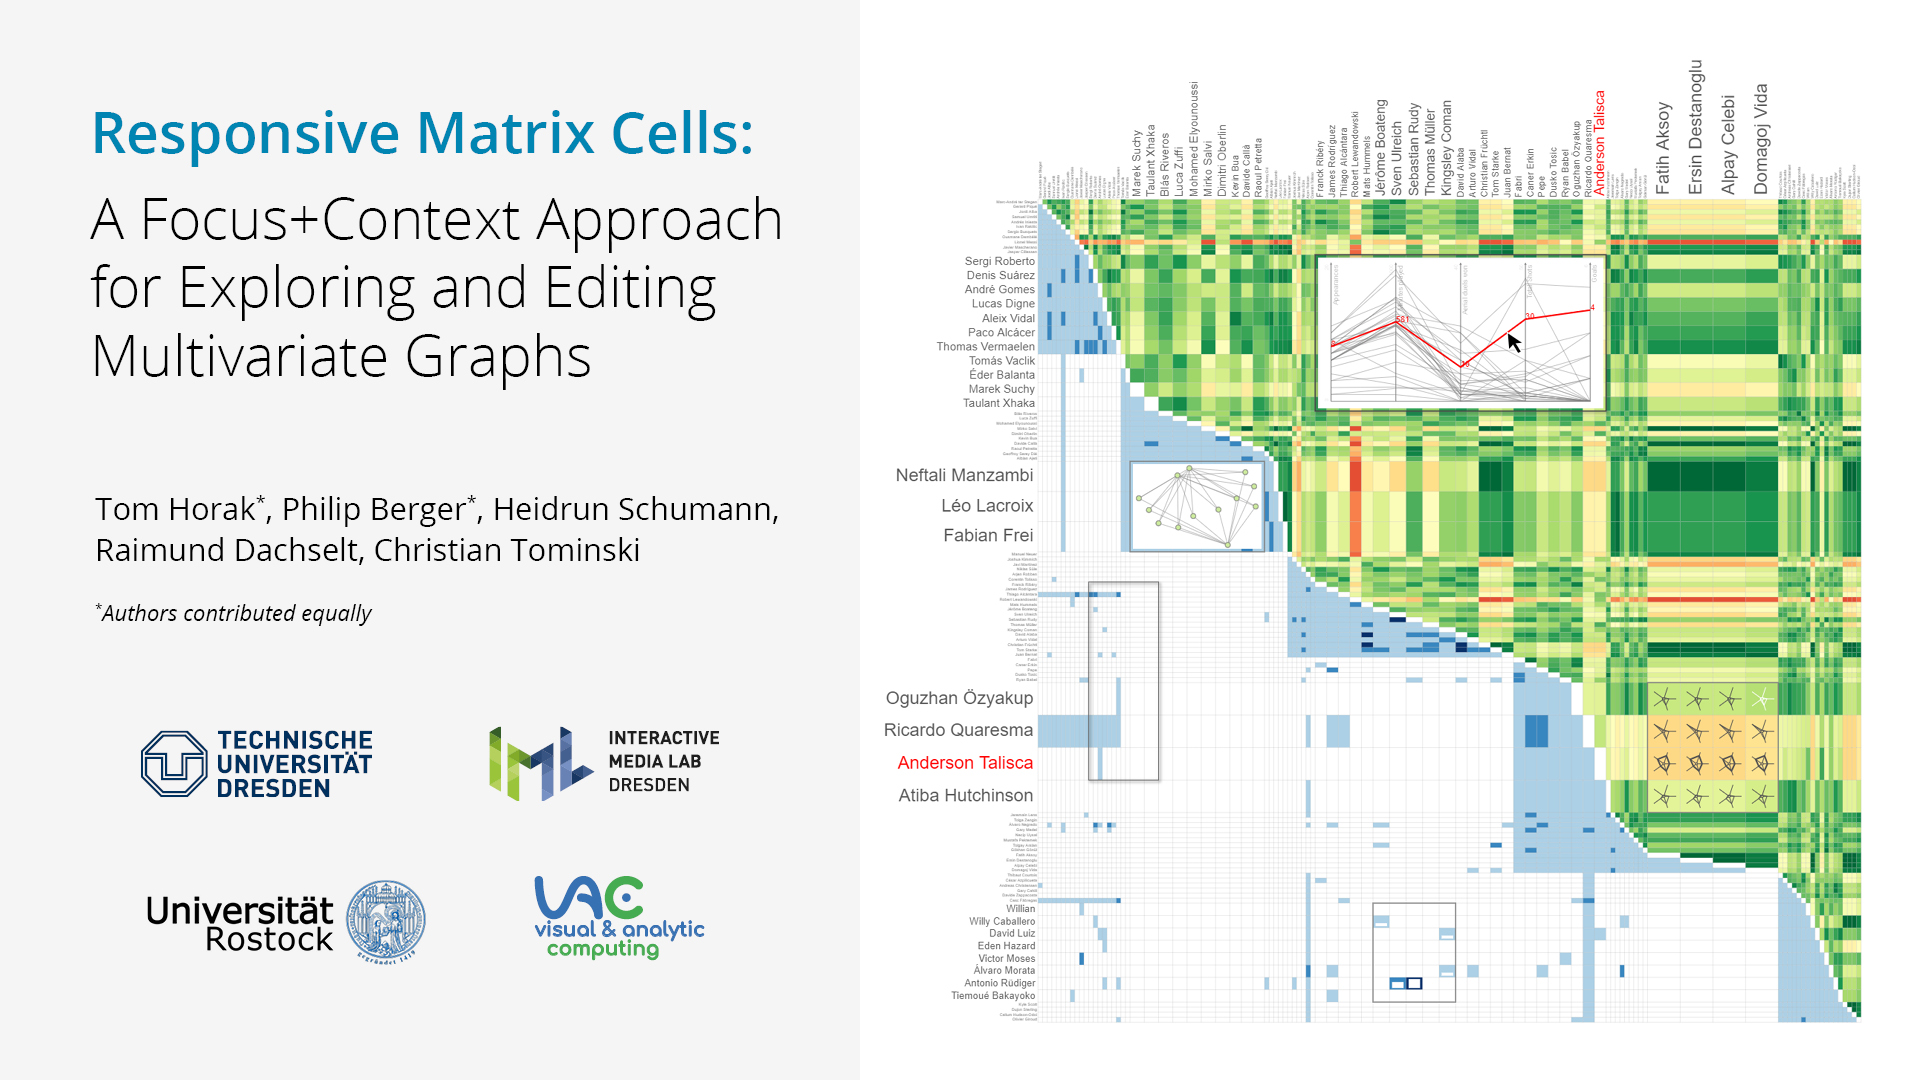 Full video of Responsive Matrix Cells.